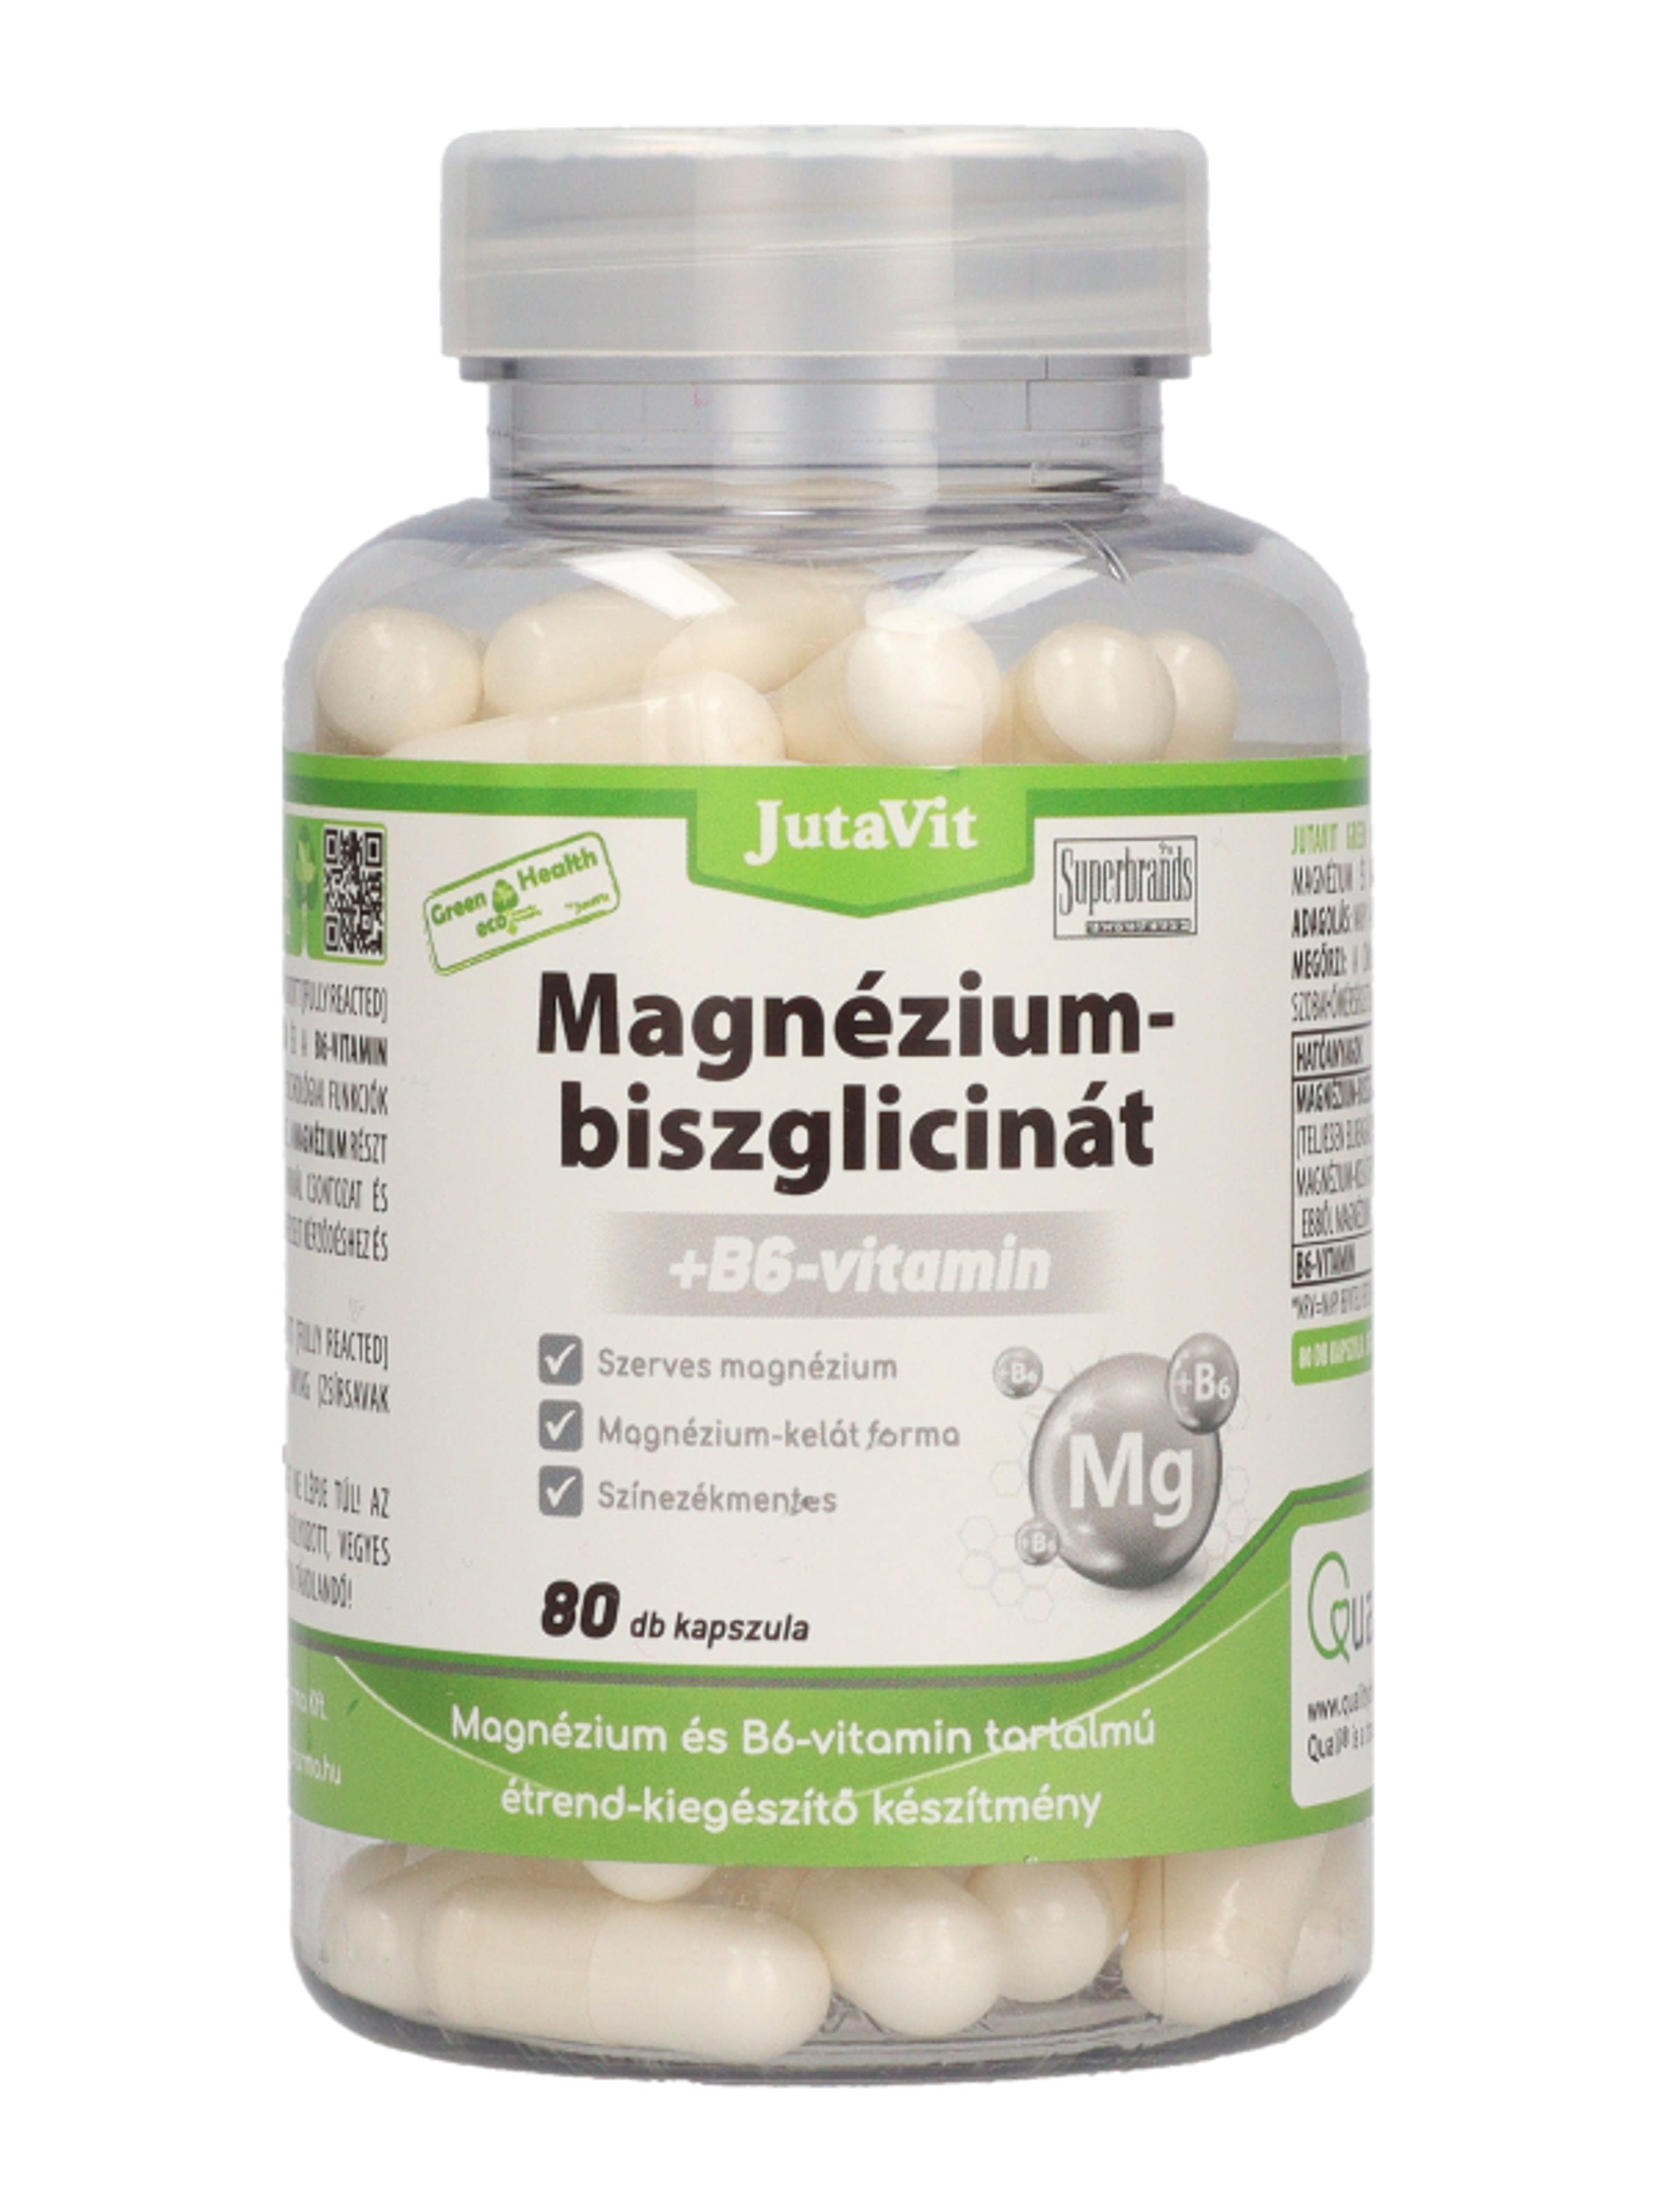 JutaVit Green&Health Magnézium-biszglicinát + B6-vitamin kapszula - 80 db-2